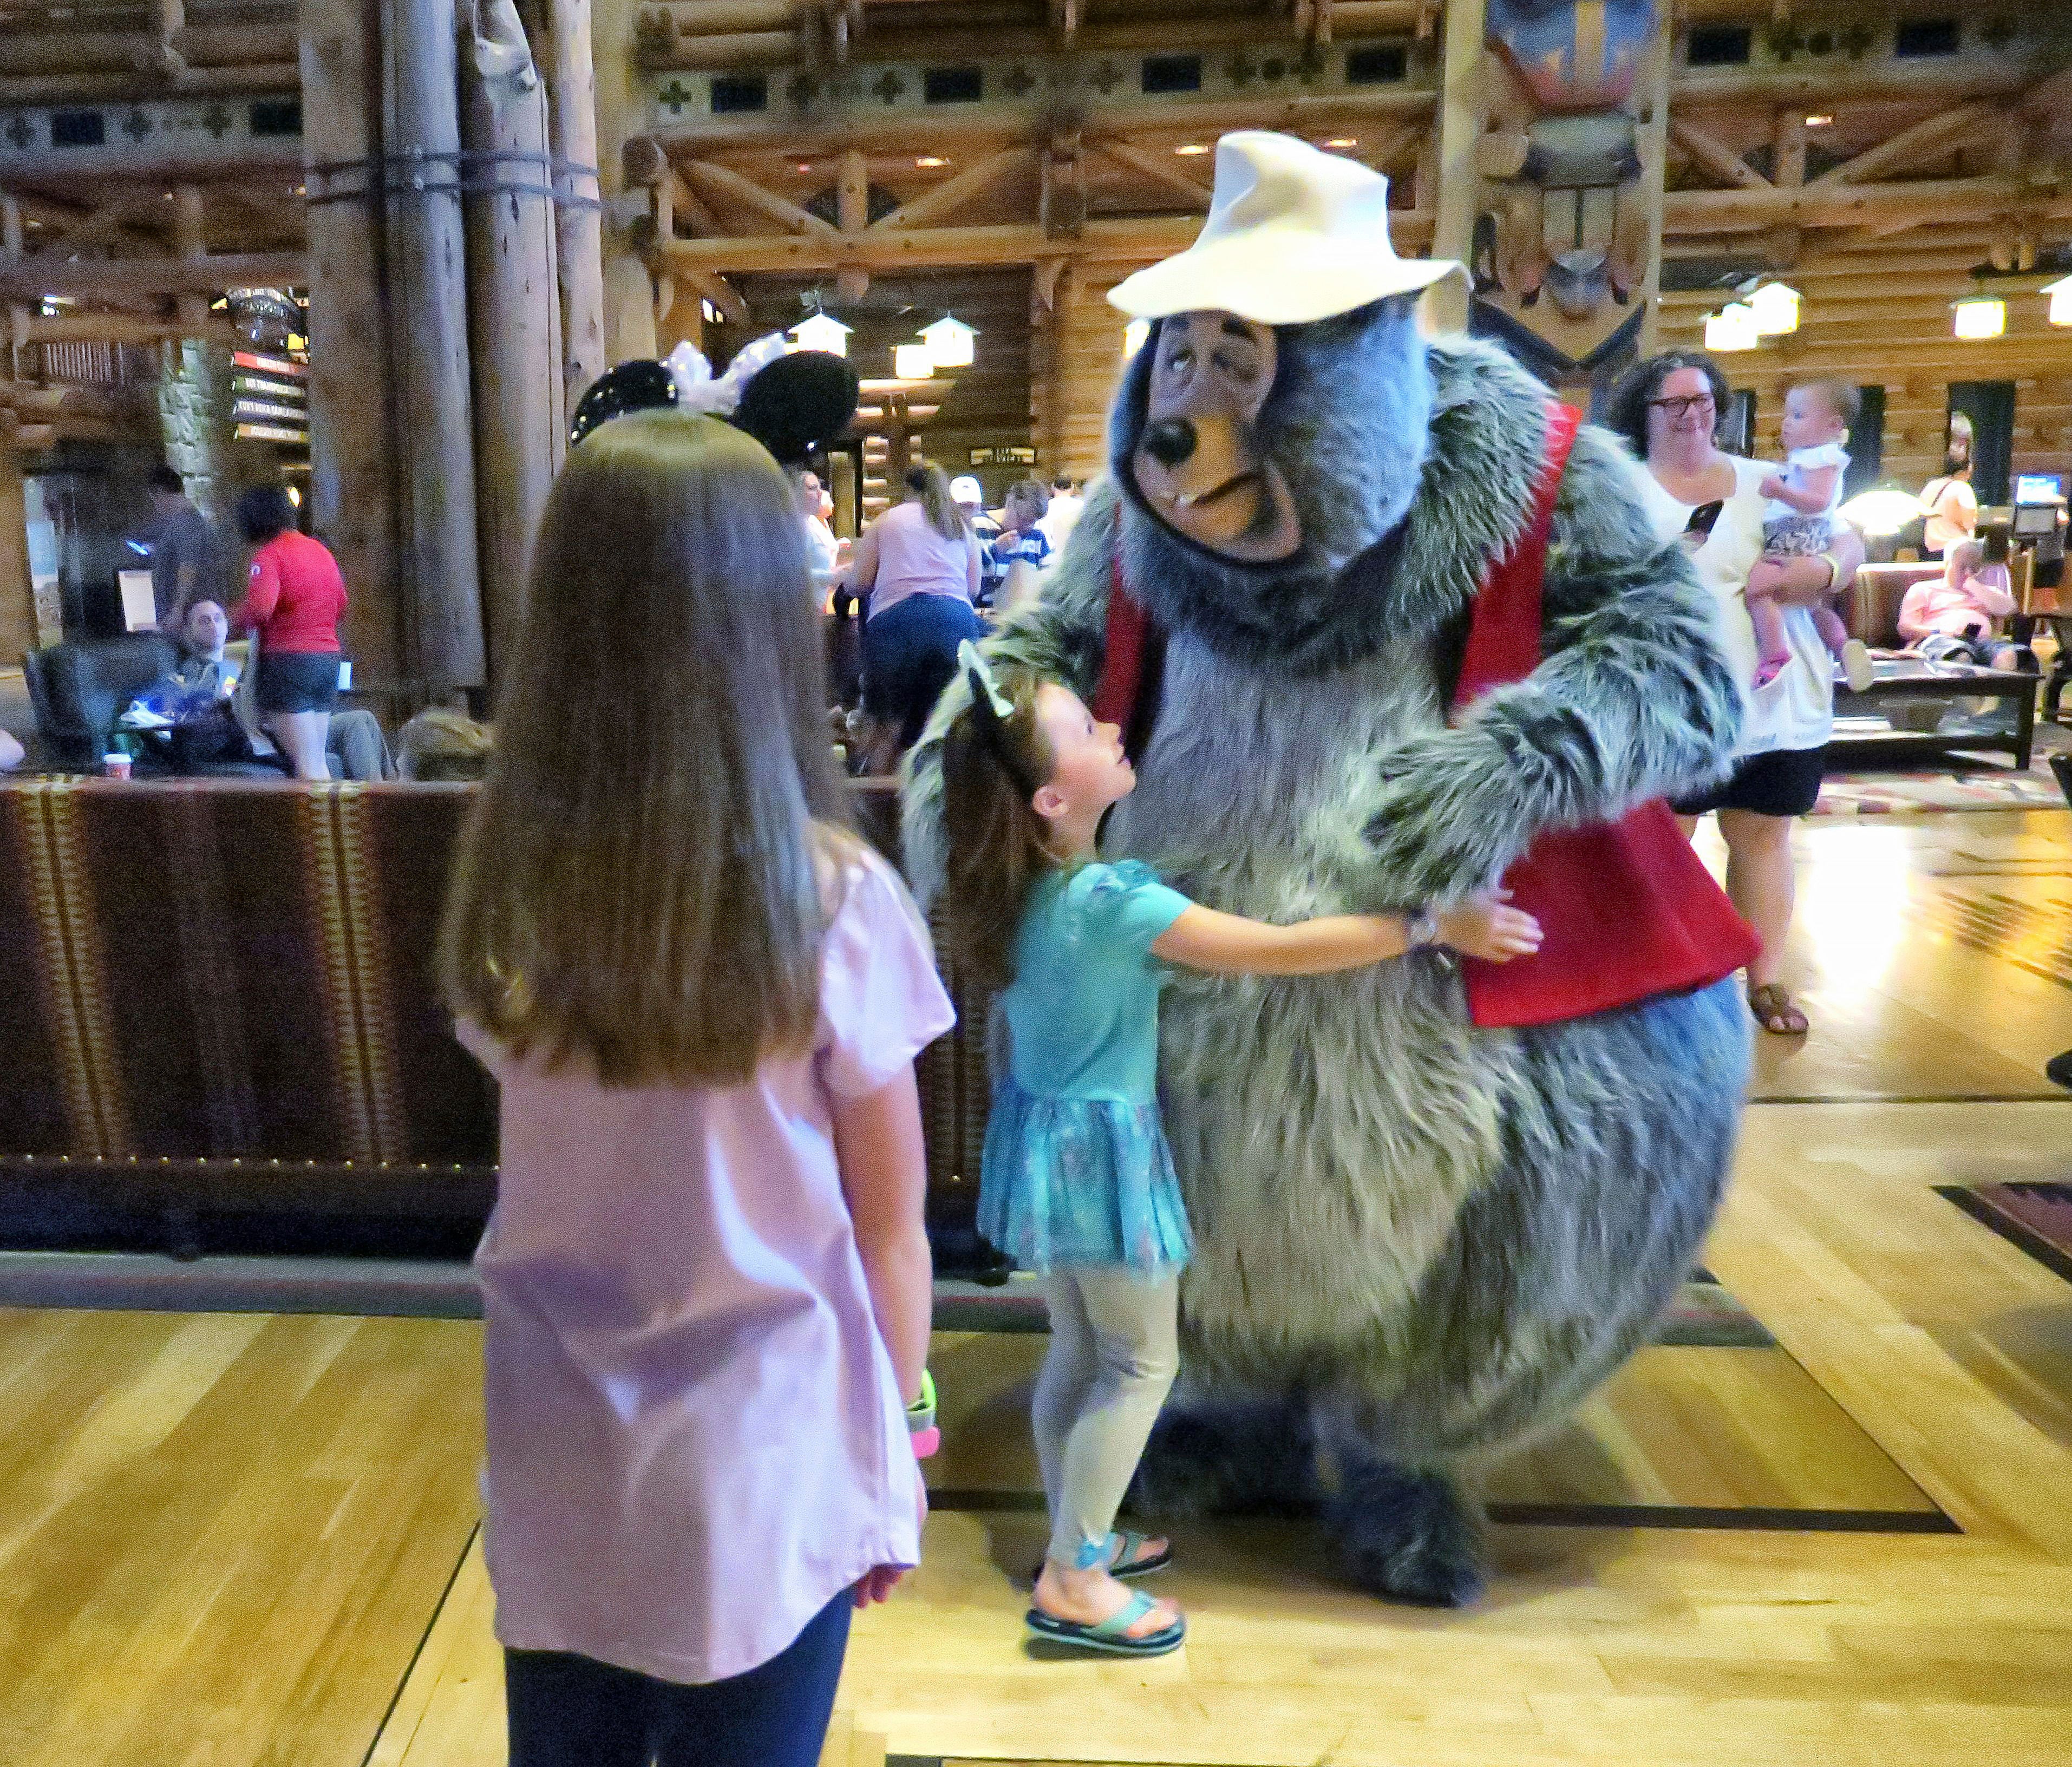 Disney character Big Al entertains children during Hurricane Ian shut in